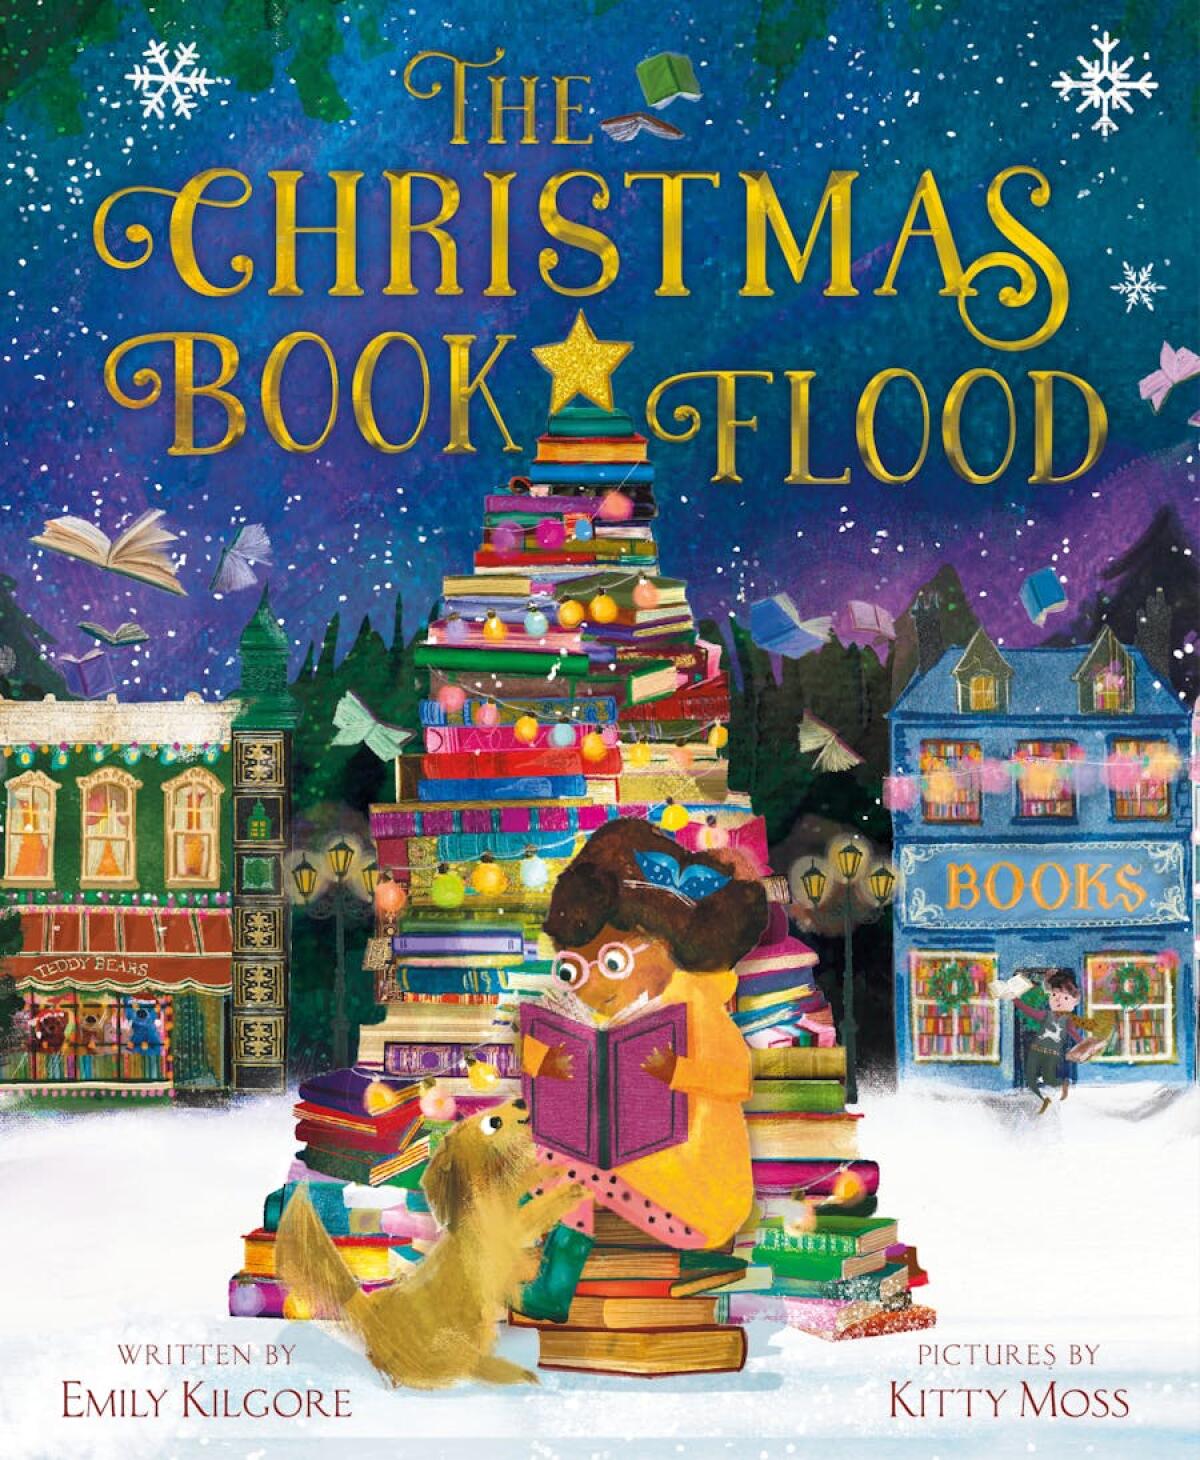 Warwick’s bookstore will present “Celebrate Jólabókaflód!” or “Christmas Book Flood," on Sunday, Dec. 18, in La Jolla.